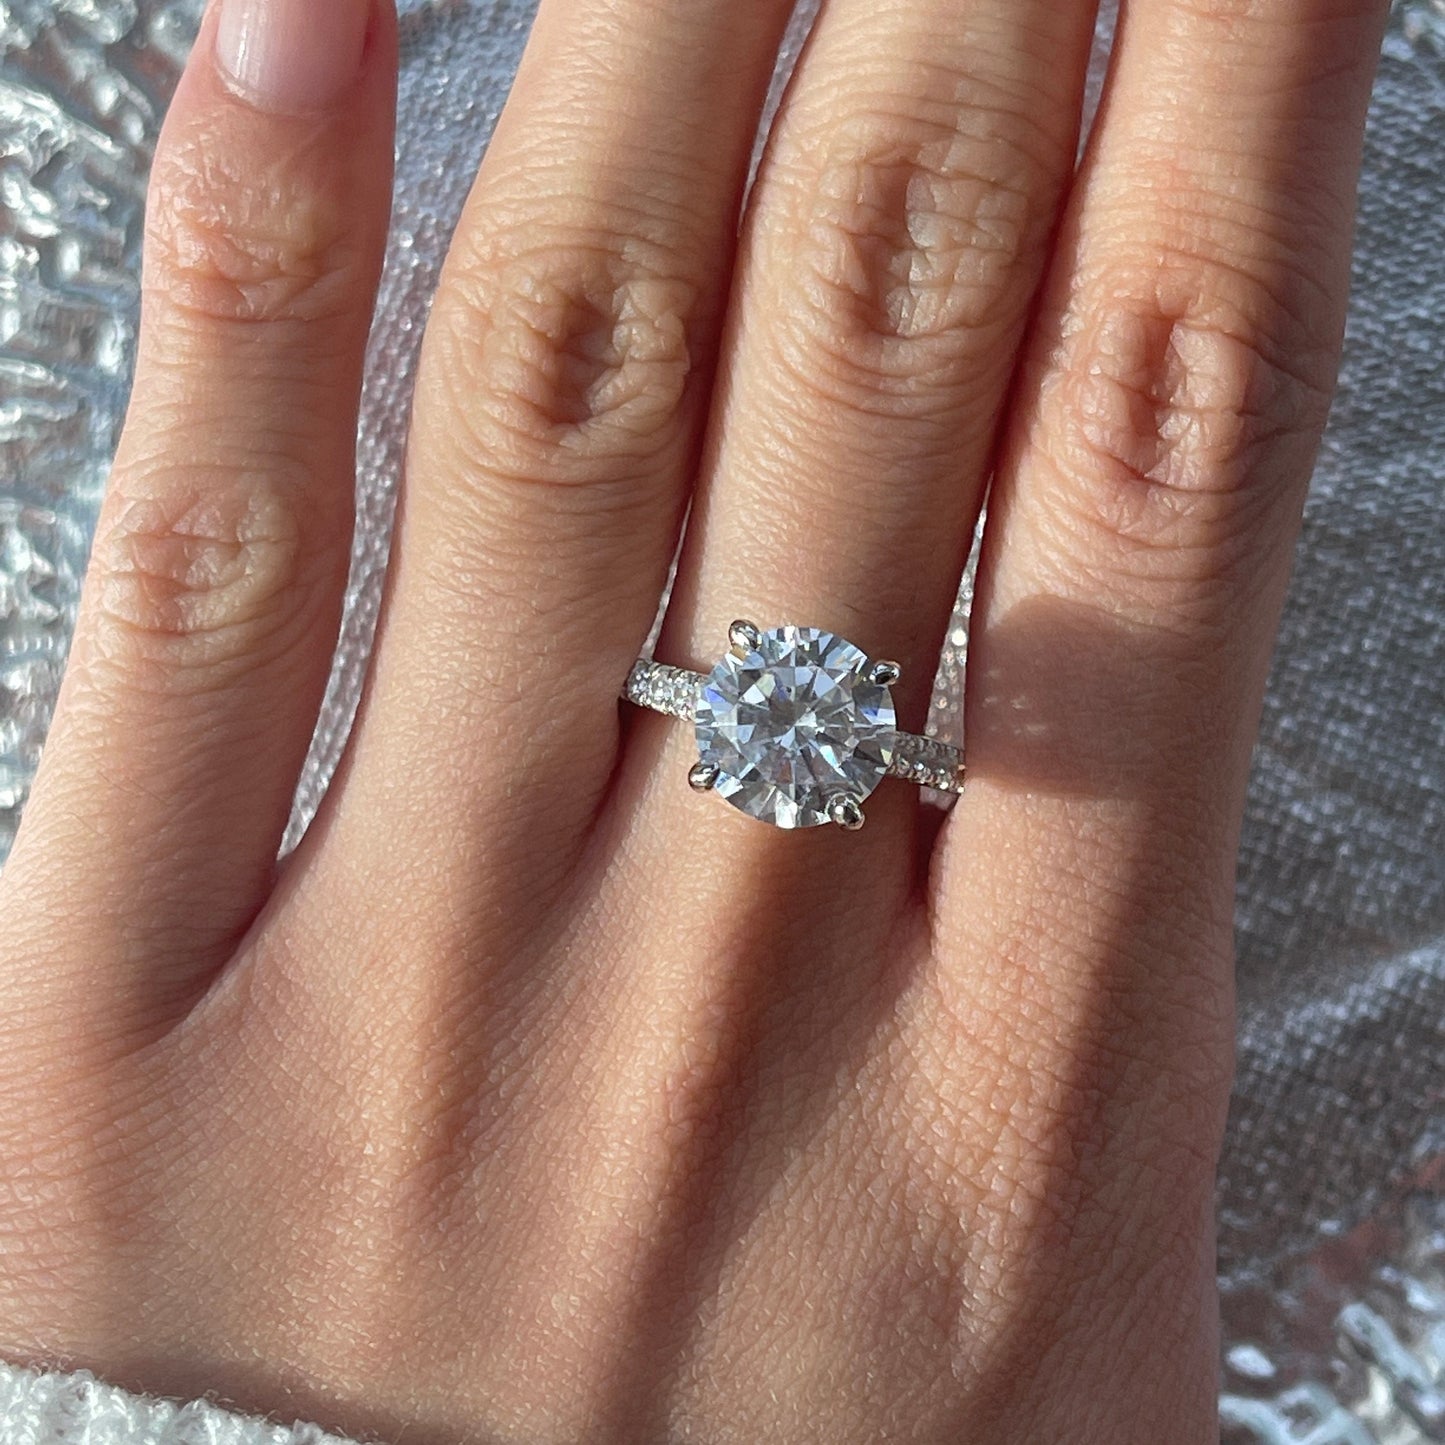 3 Ct Solitaire Round Diamond Ring, Lab-created Diamond Engagement Ring, Classic Romantic Platinum Ring, Wedding Anniversary Promise Ring